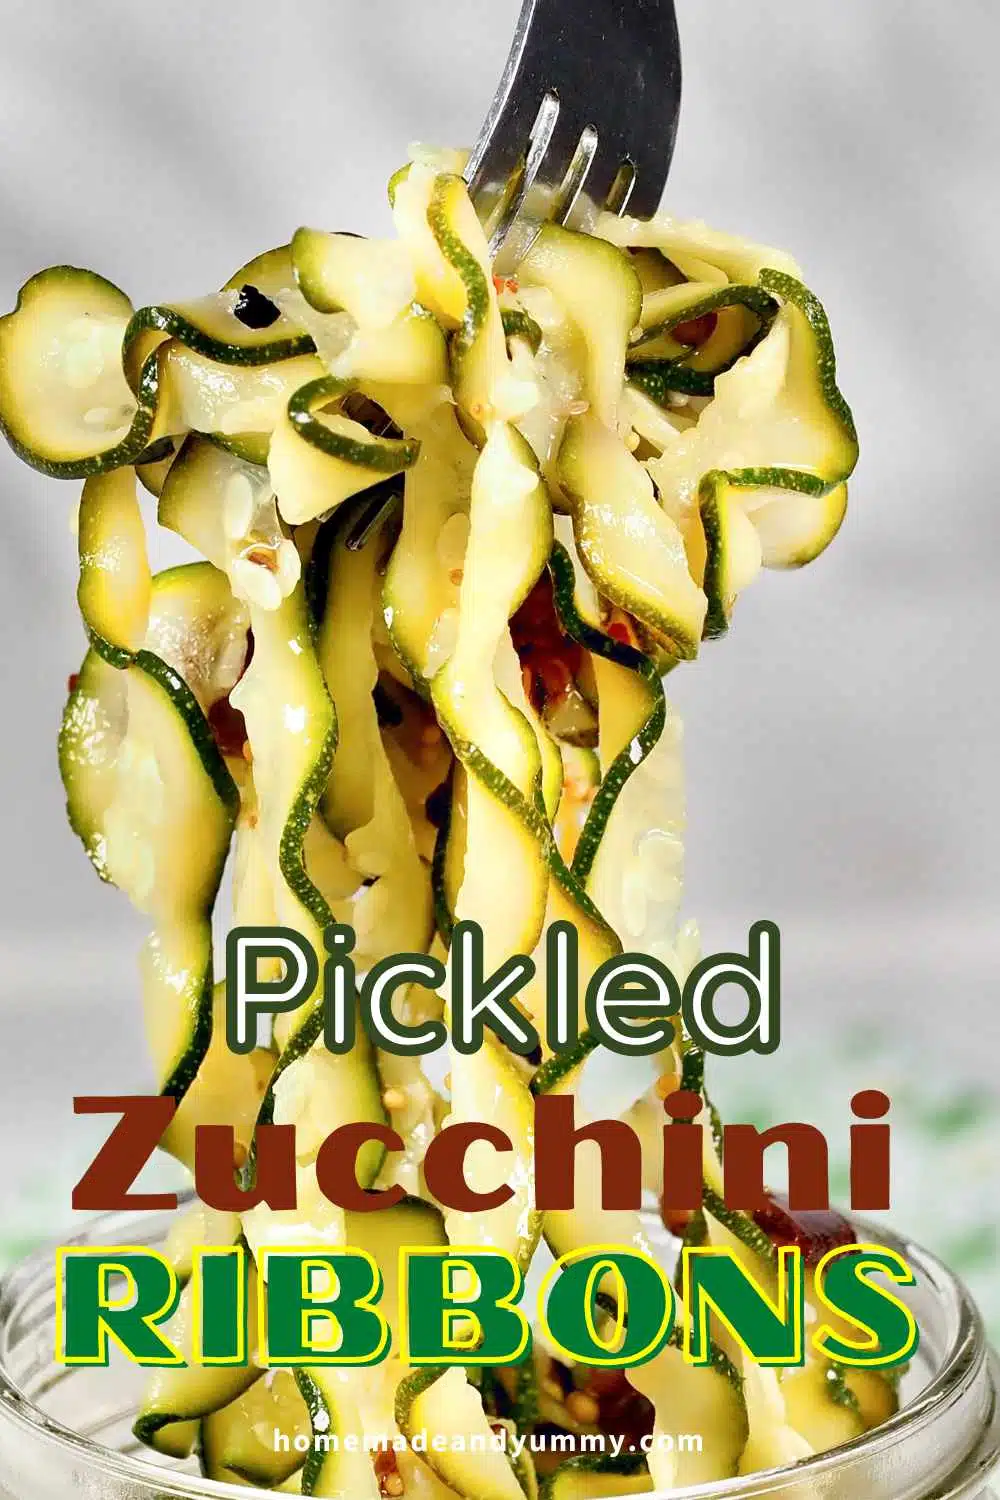 Refrigerator Pickled Zucchini Ribbons a delicious condiment.